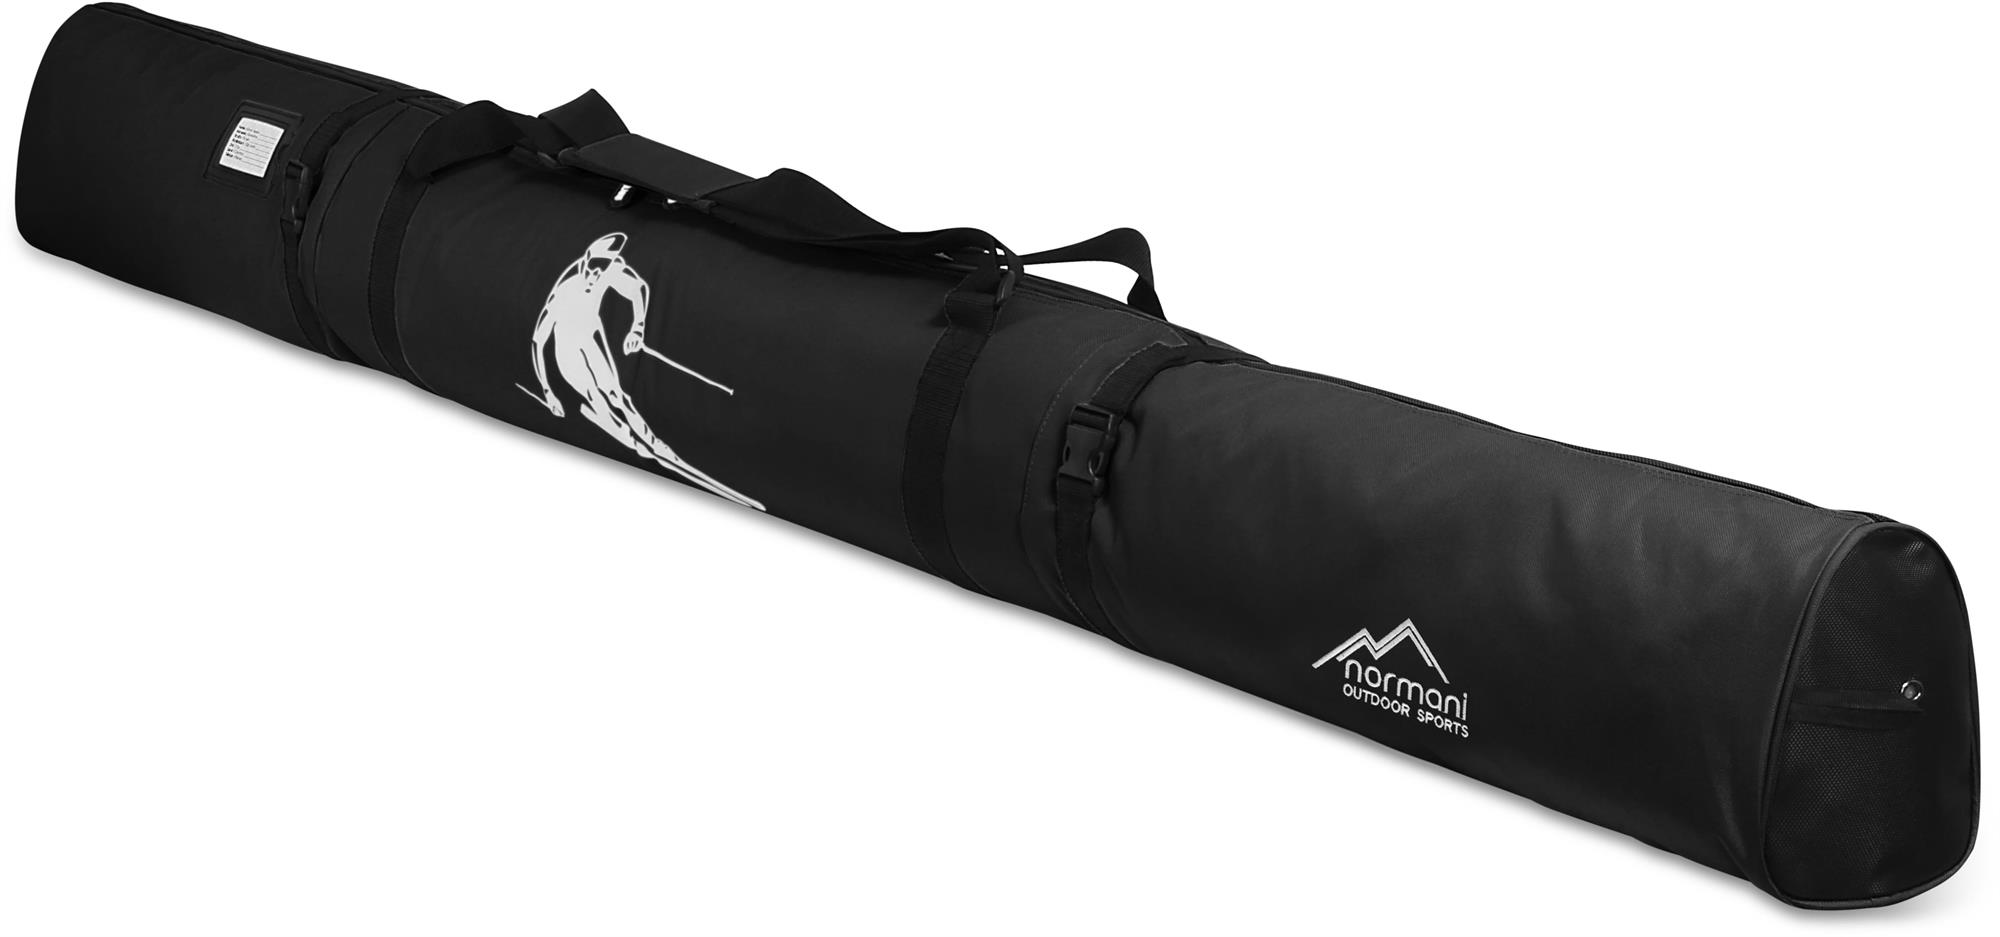 Skitasche Skisack Skicase Skibag Skicover Für Ski 160-170 cm oder 170-180 cm 